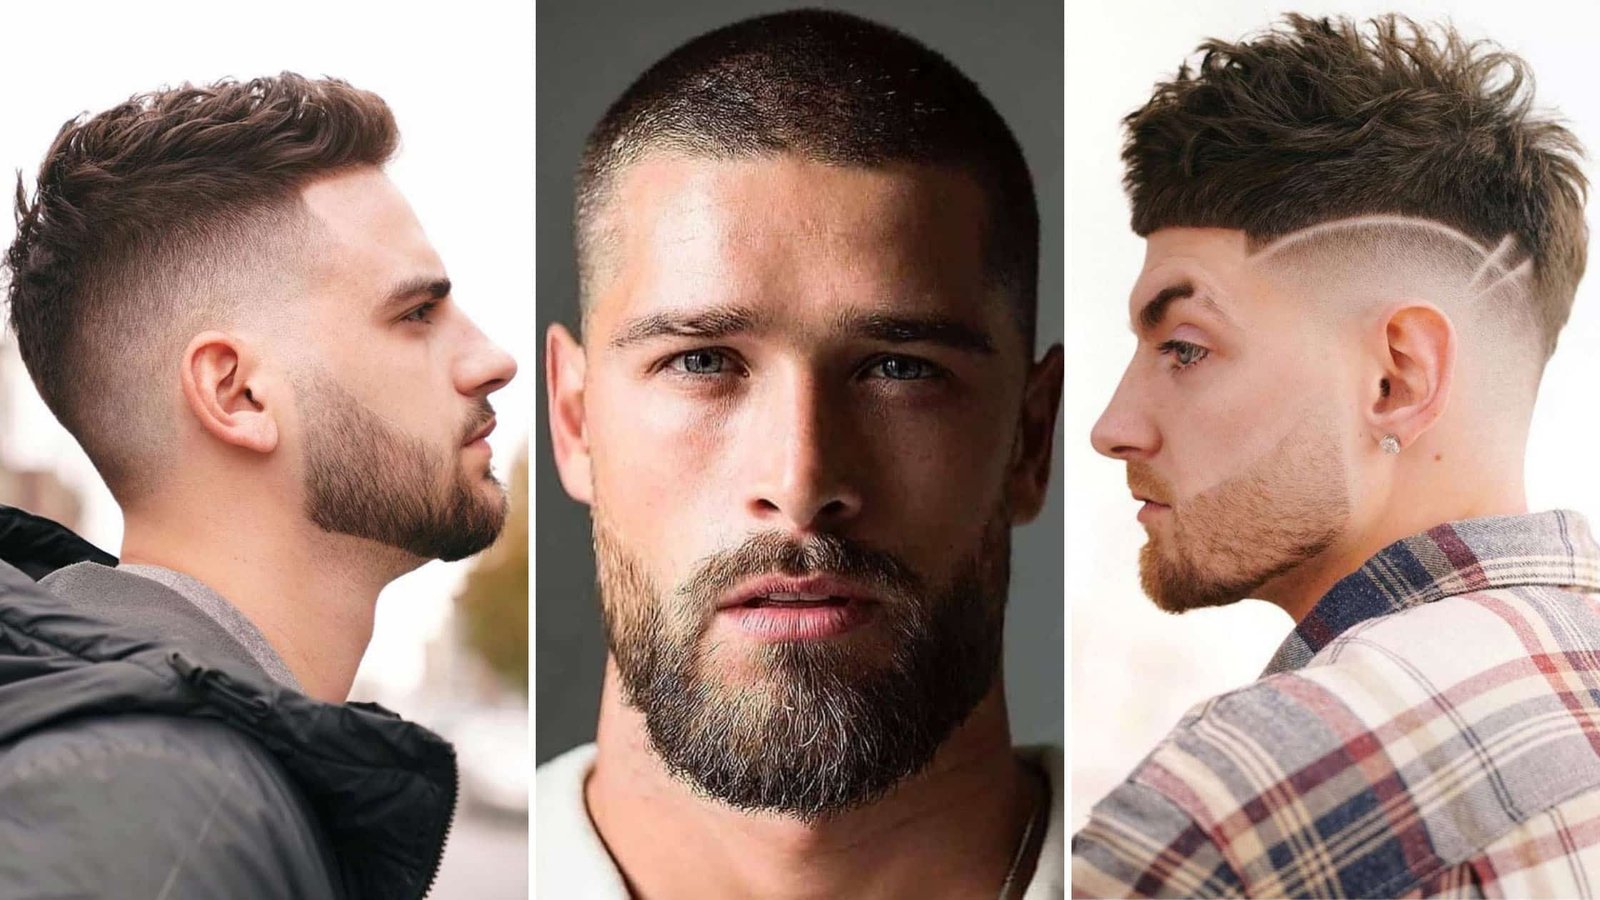 Hairstyles For Men | Mens hairstyles short, Wavy hair men, Haircuts for men